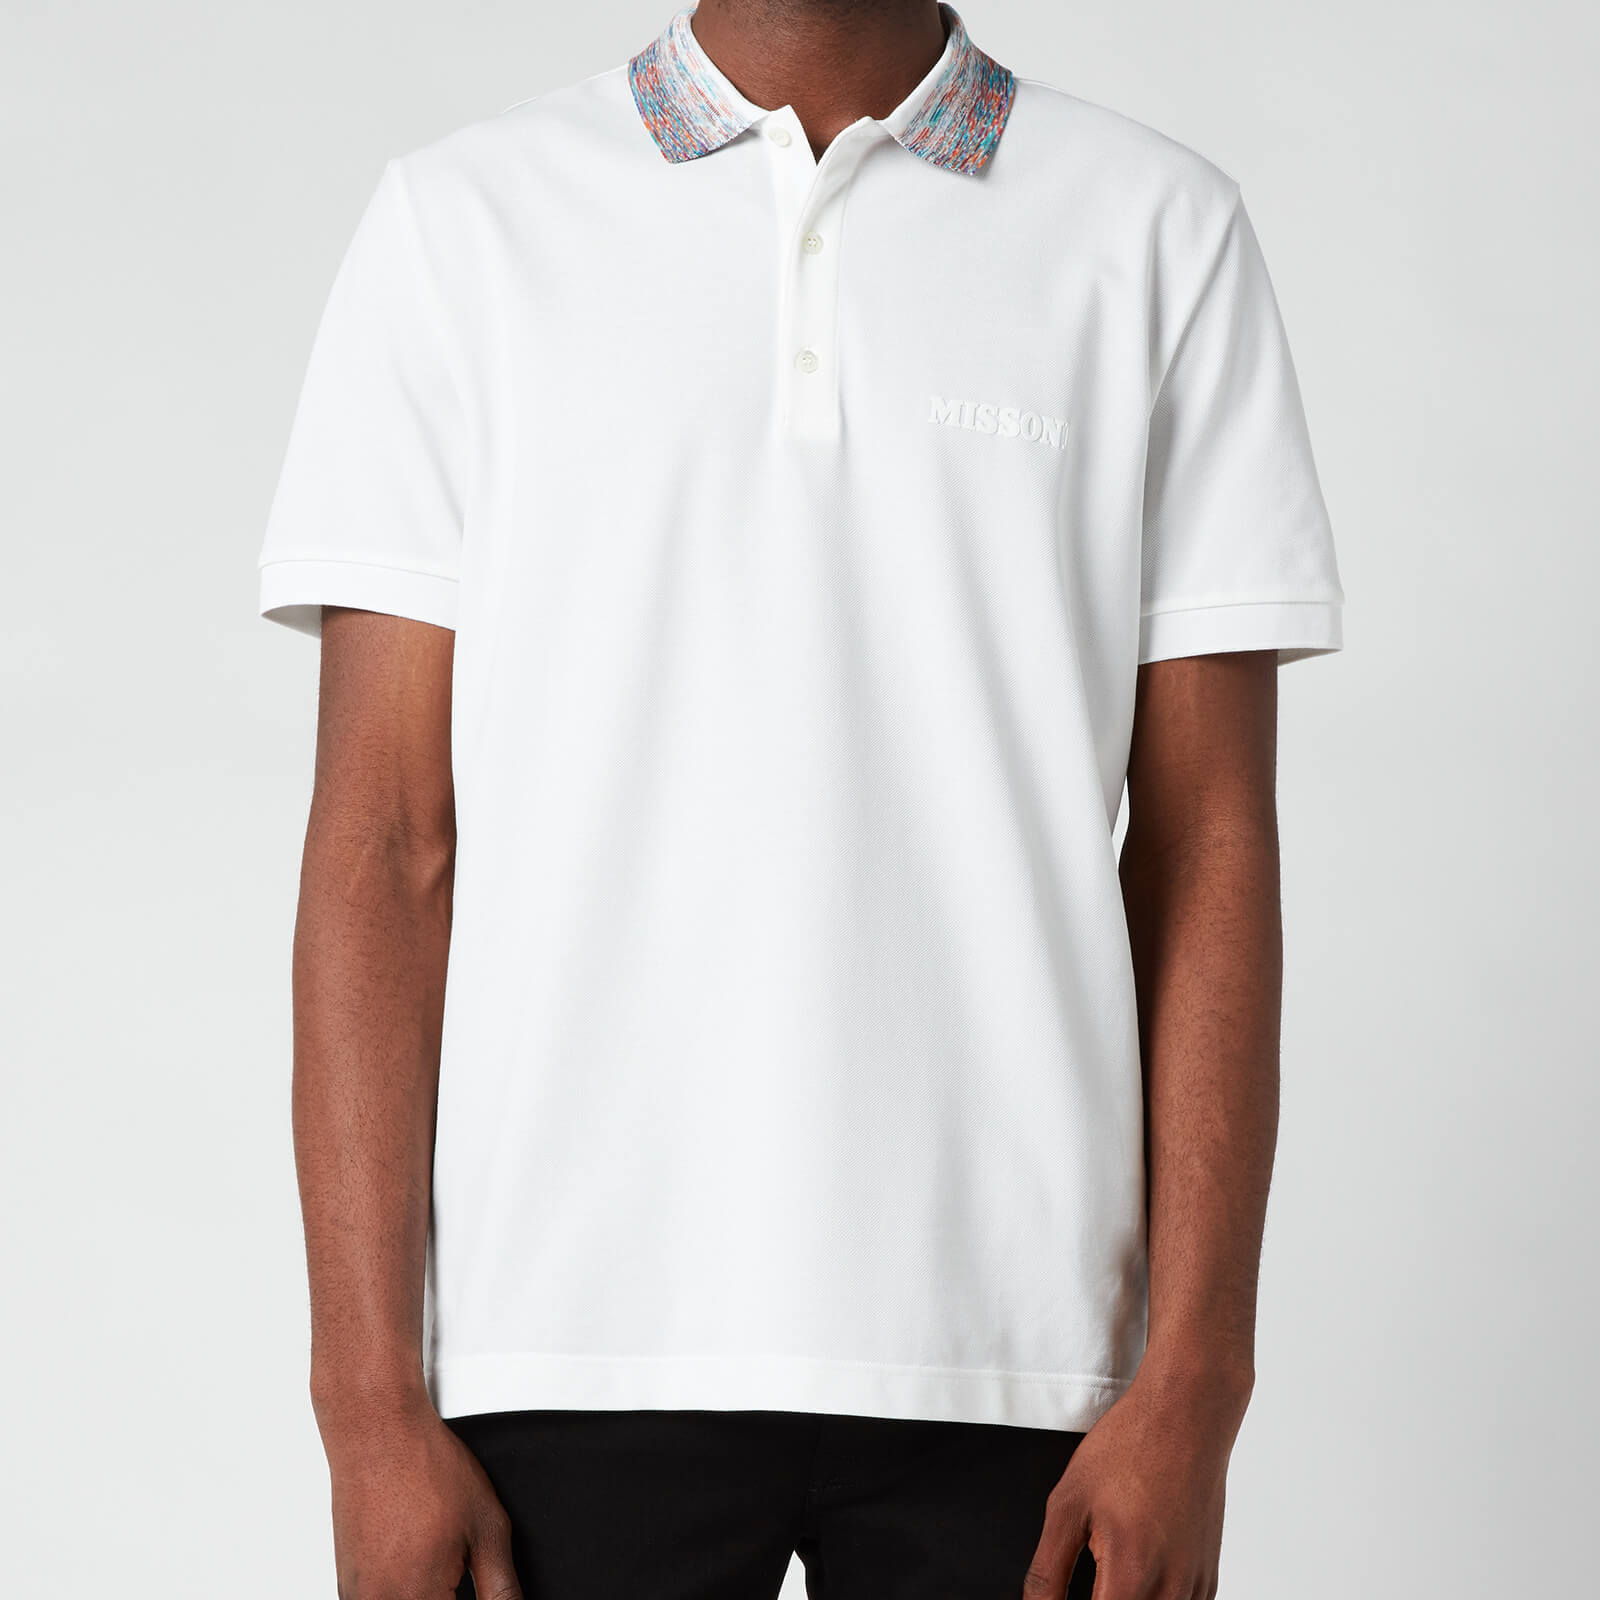 Missoni Men's Contrast Collar Pique Polo Shirt - White - S